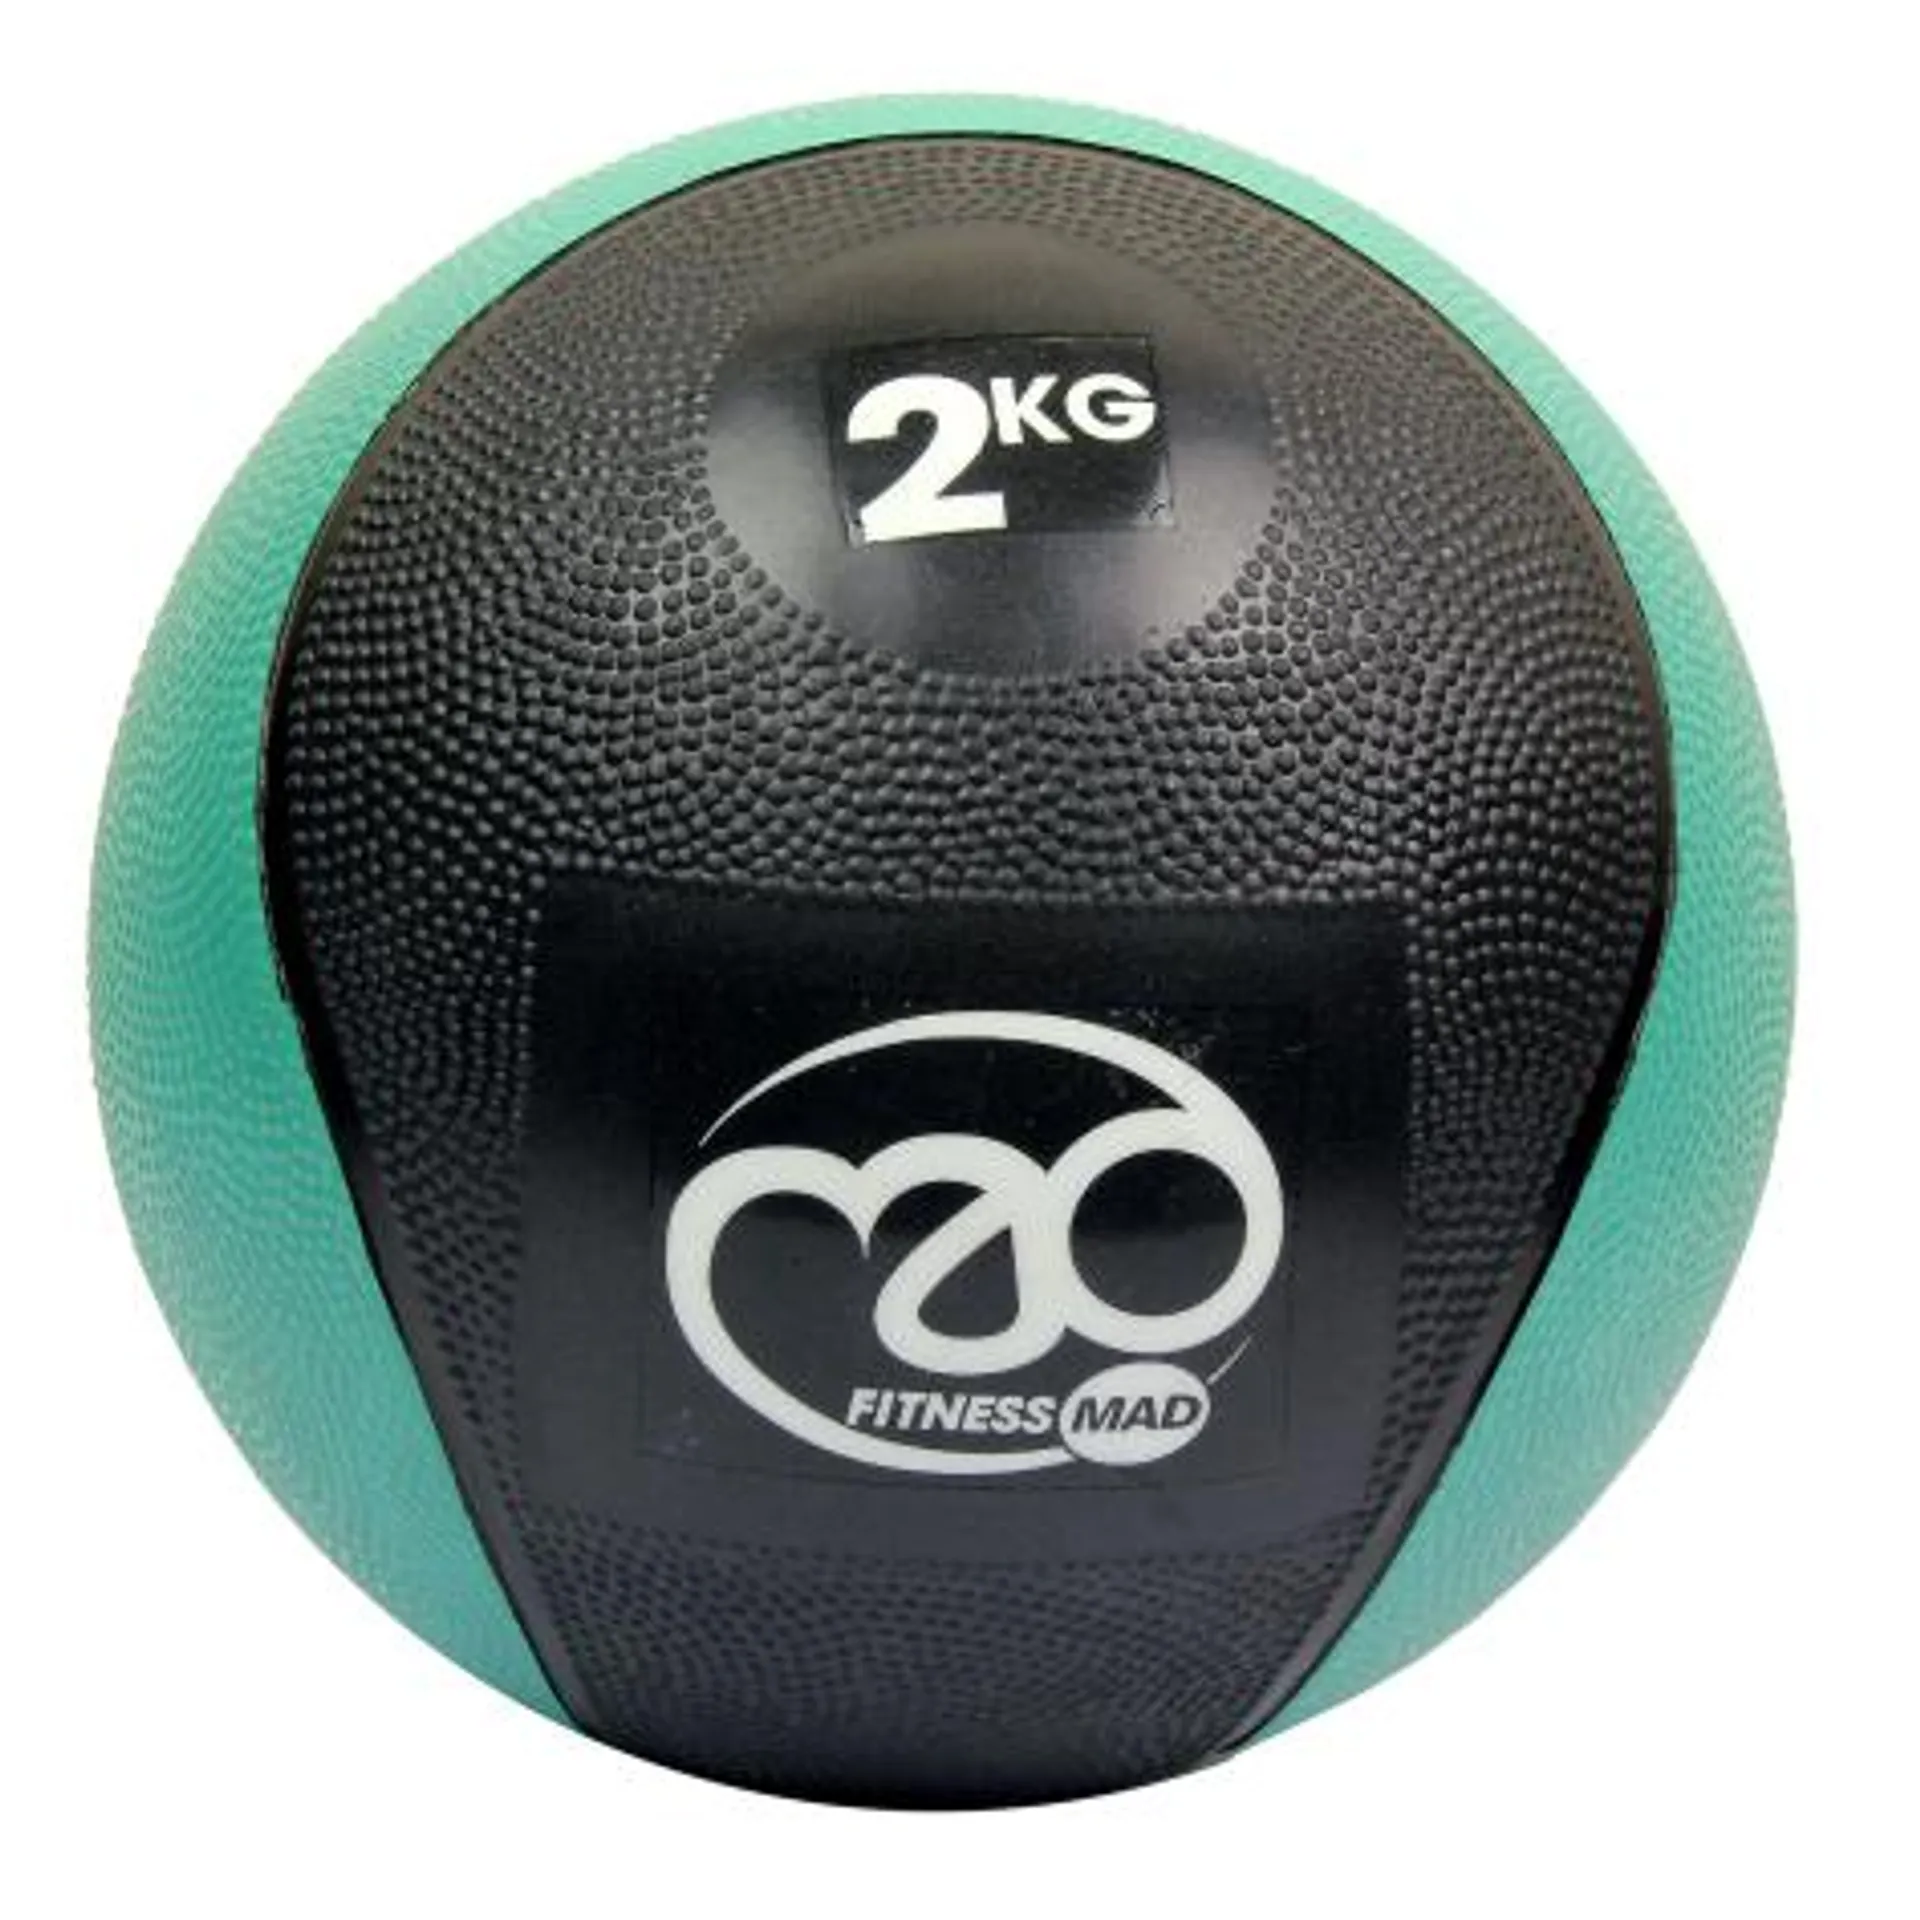 Fitness-MAD PVC Medicine Ball 2kg - Northampton Ex-Display Product